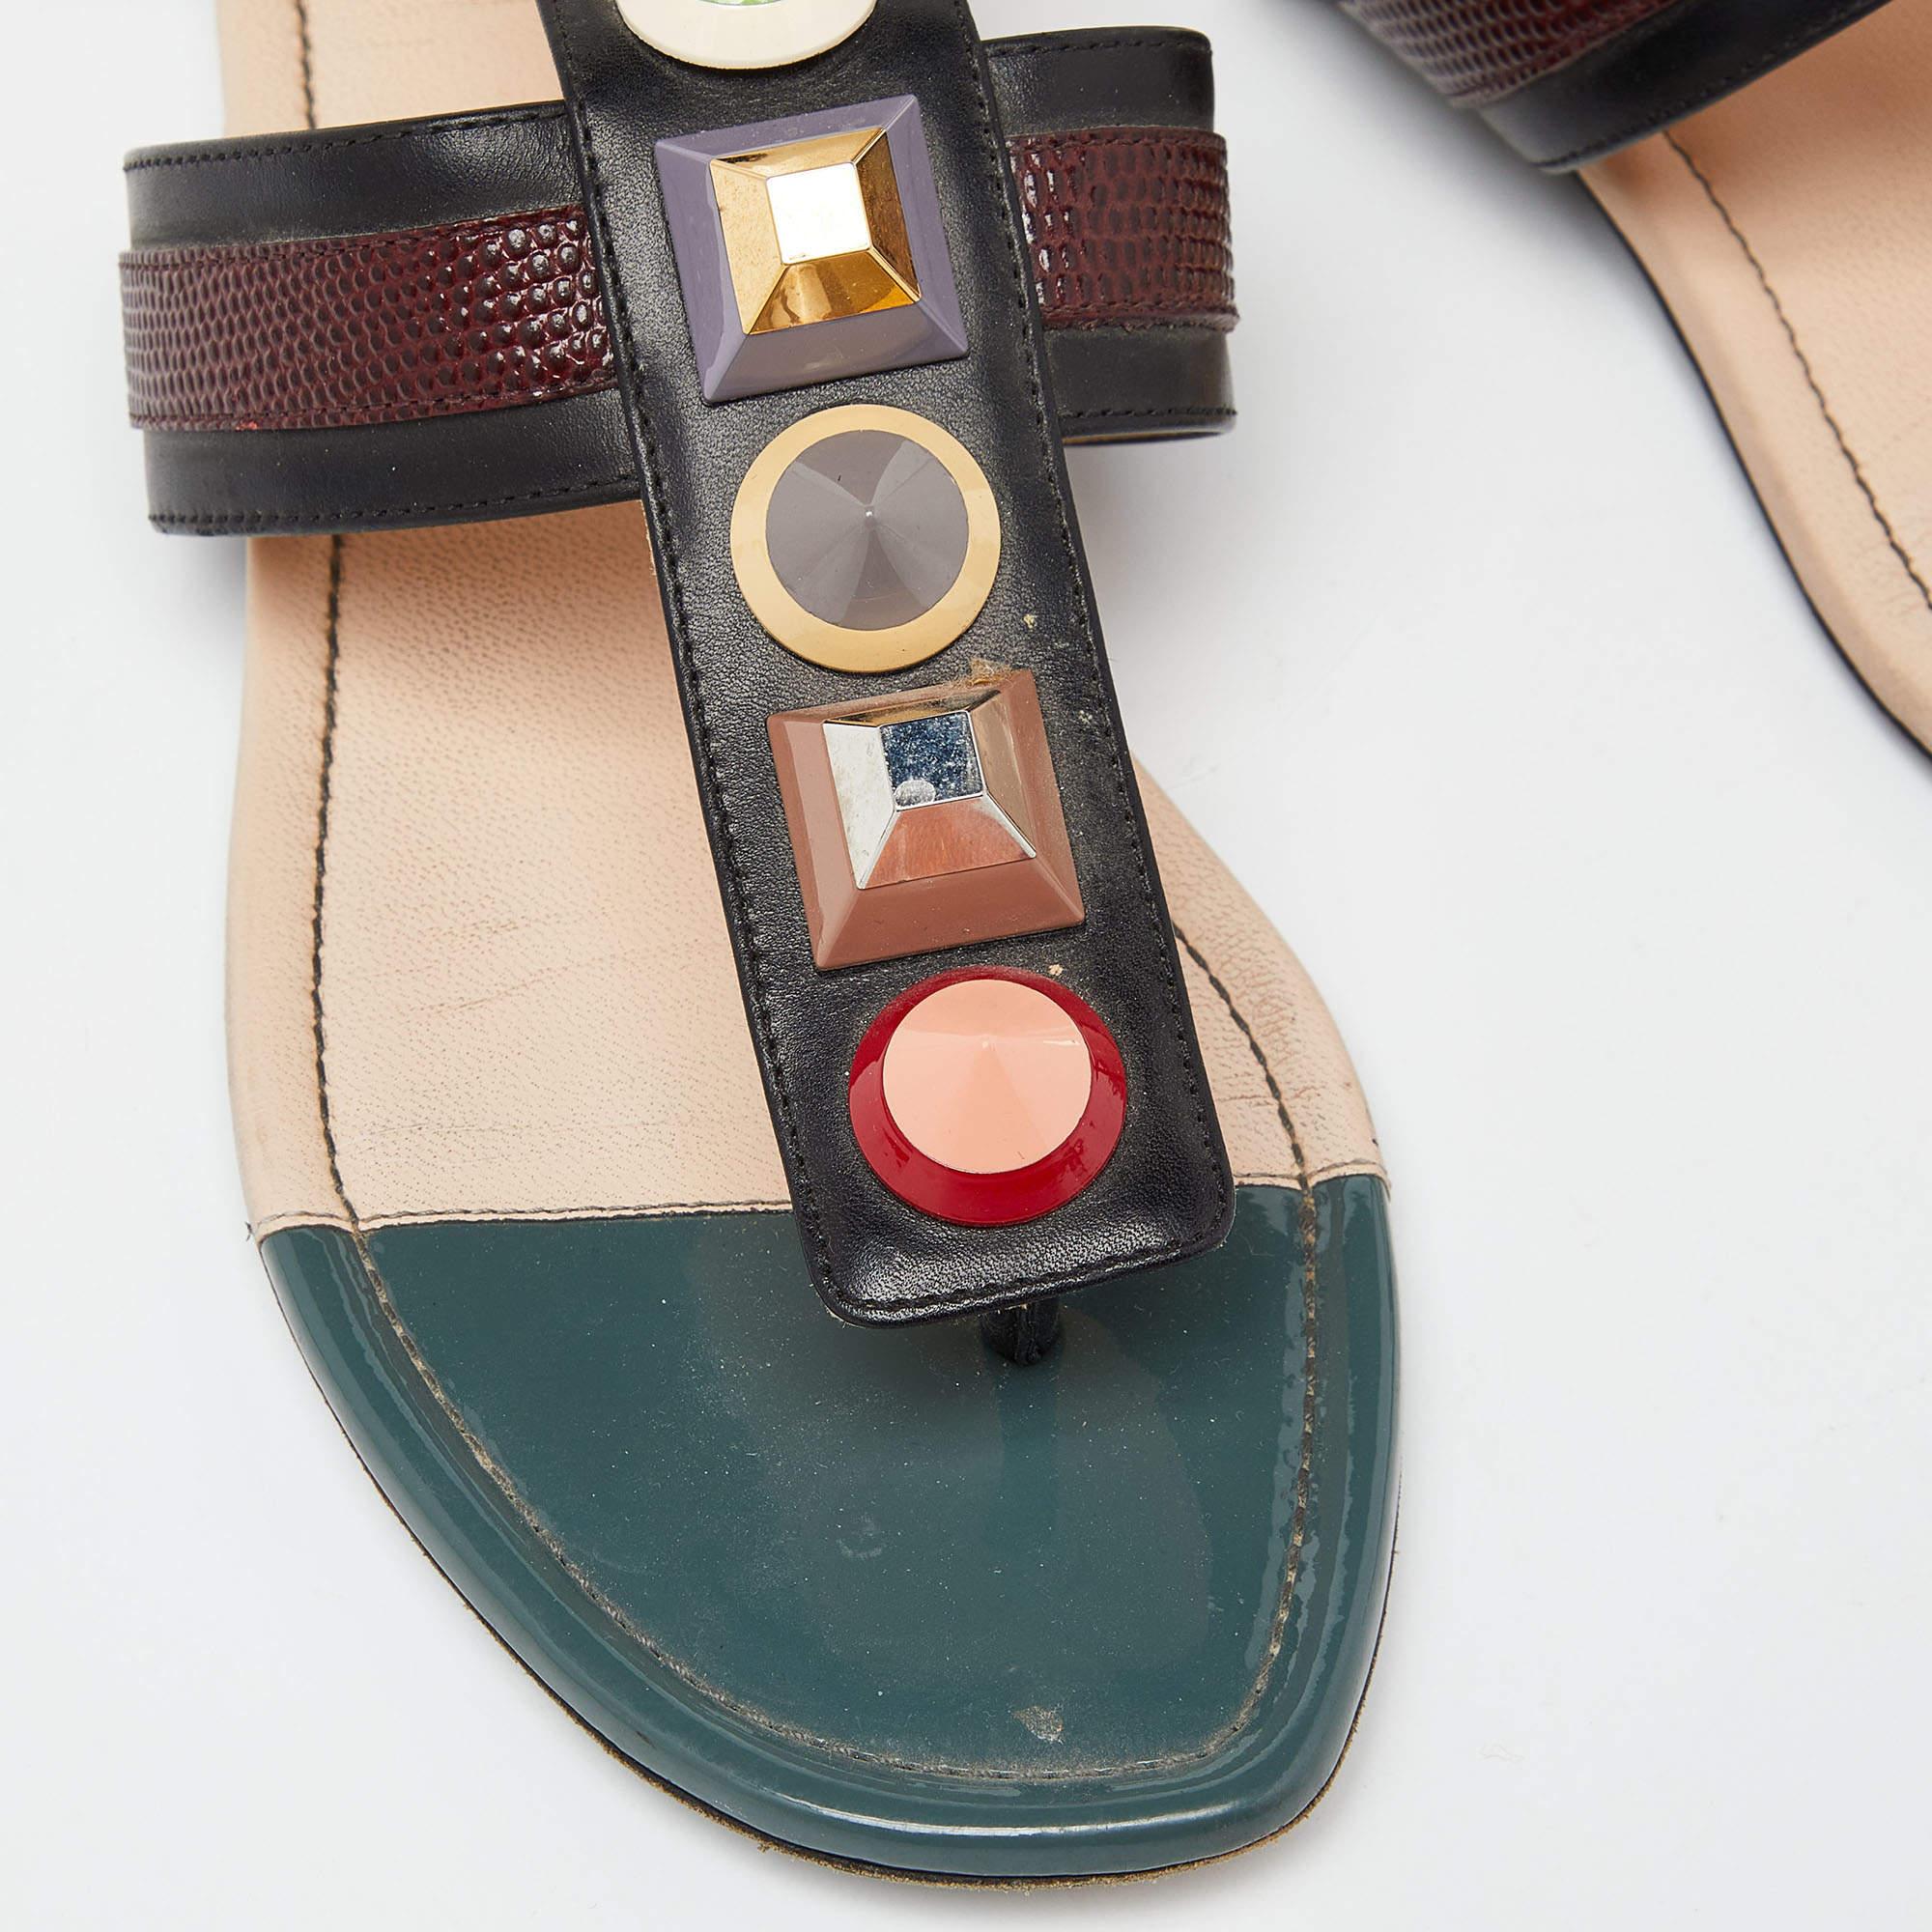  Fendi Multicolor Leather Studded Ankle Strap Flat Sandals Size 35 1